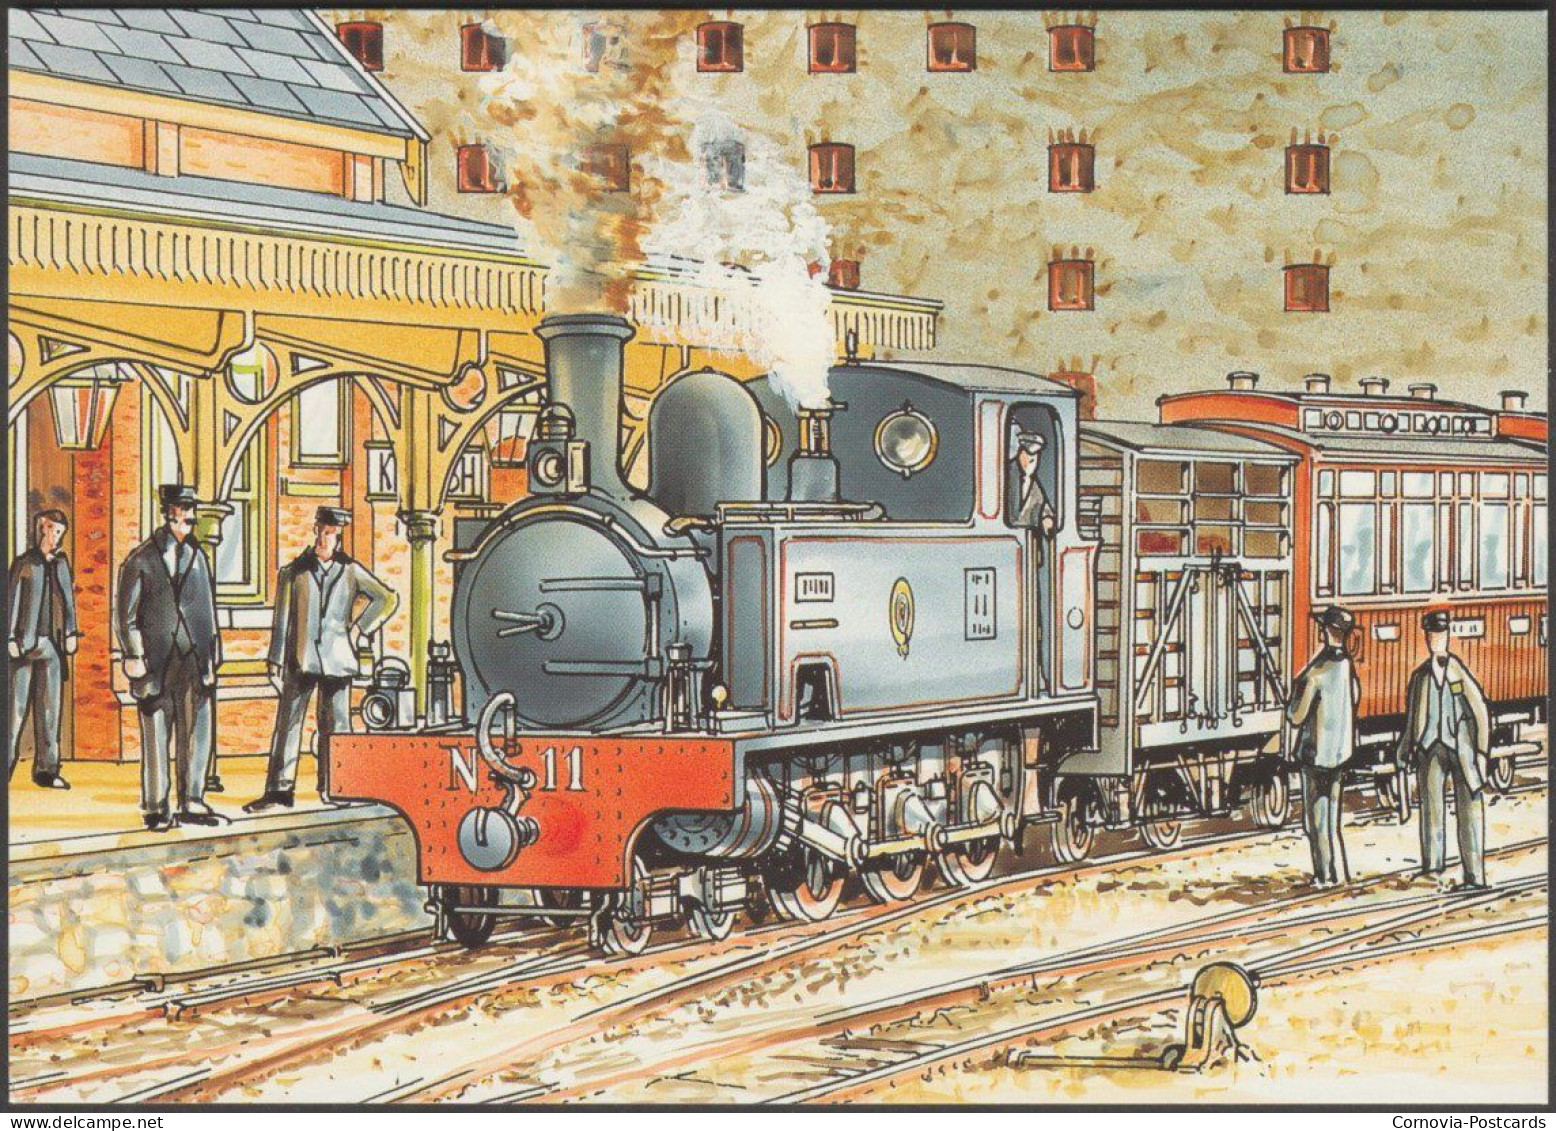 West Clare Railway By Charles Rycraft, 28p Stamp, 1995 - An Post Maximum Card - Maximumkaarten